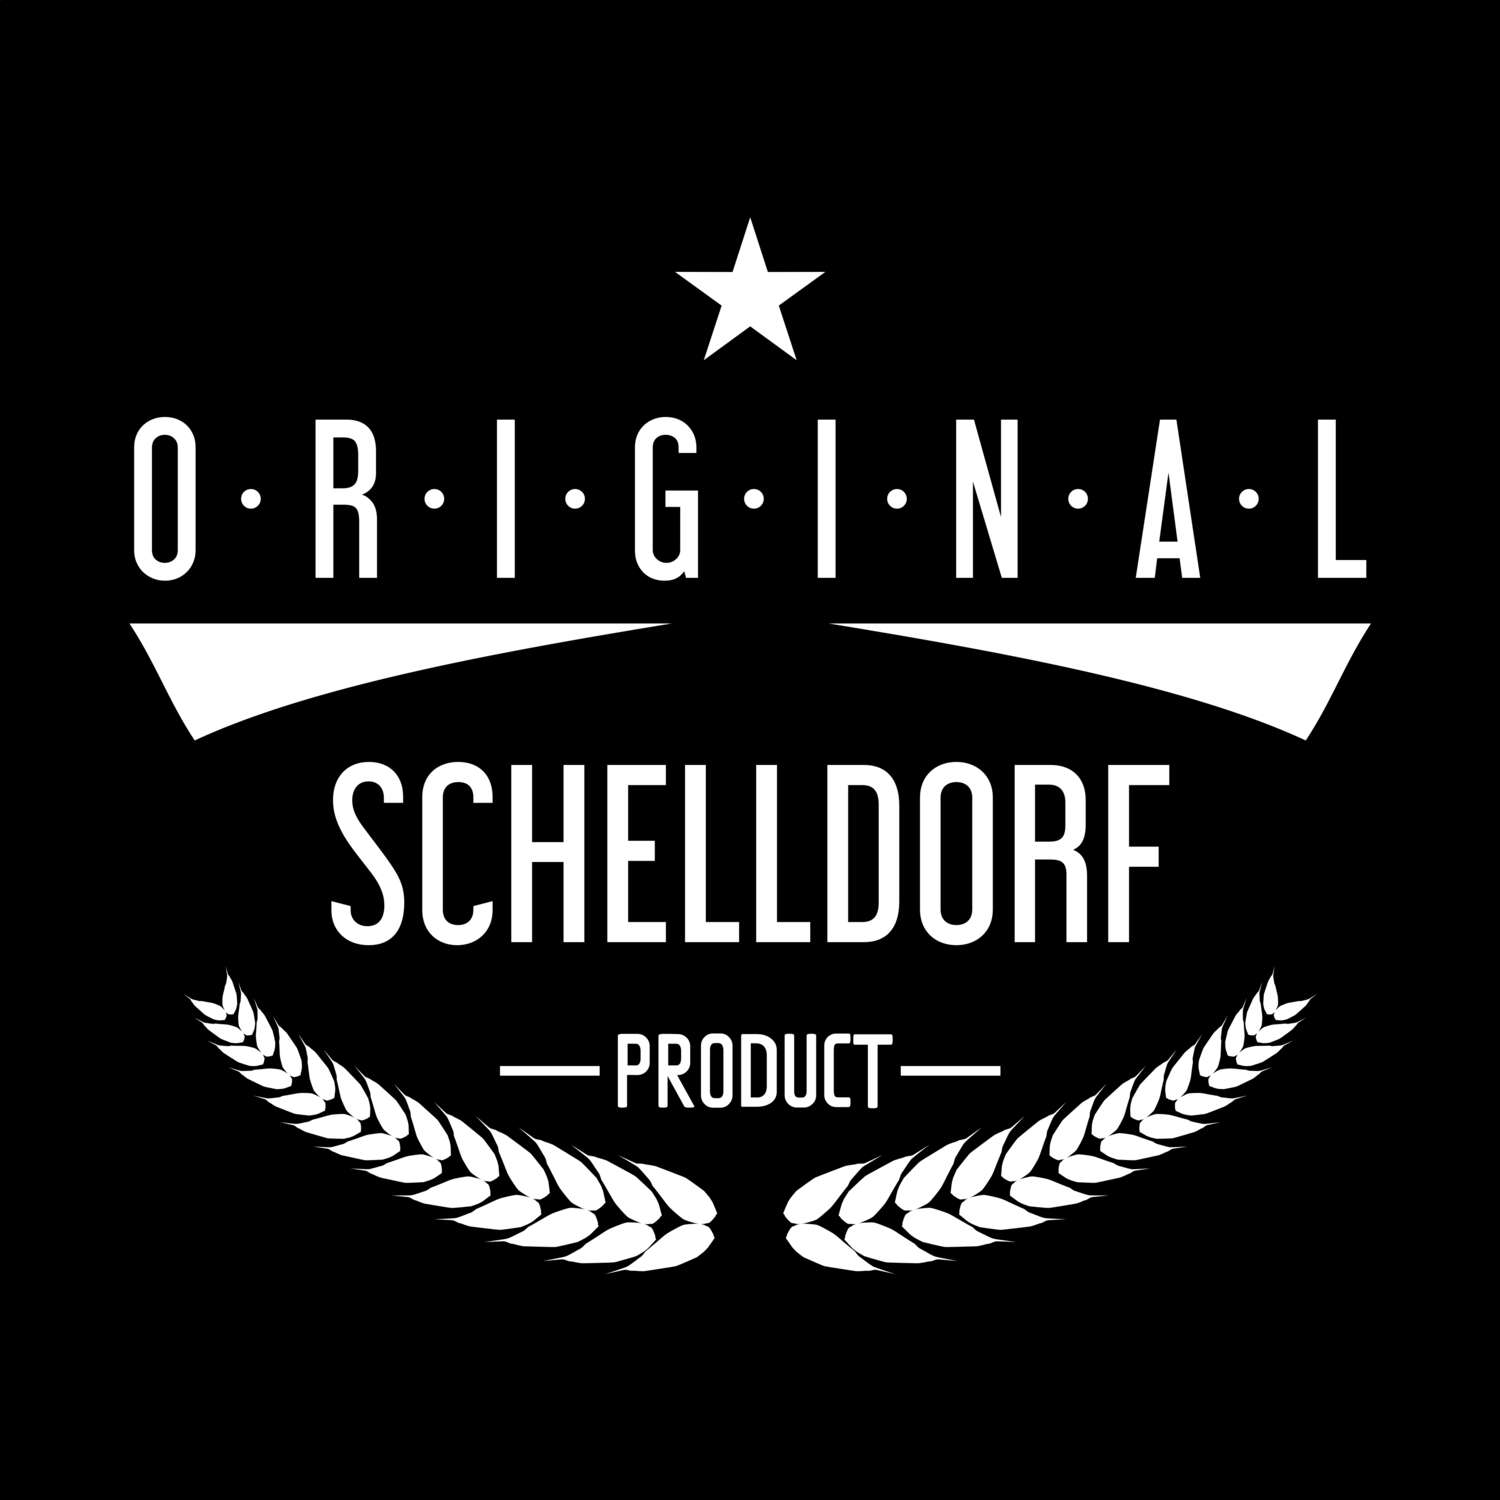 Schelldorf T-Shirt »Original Product«